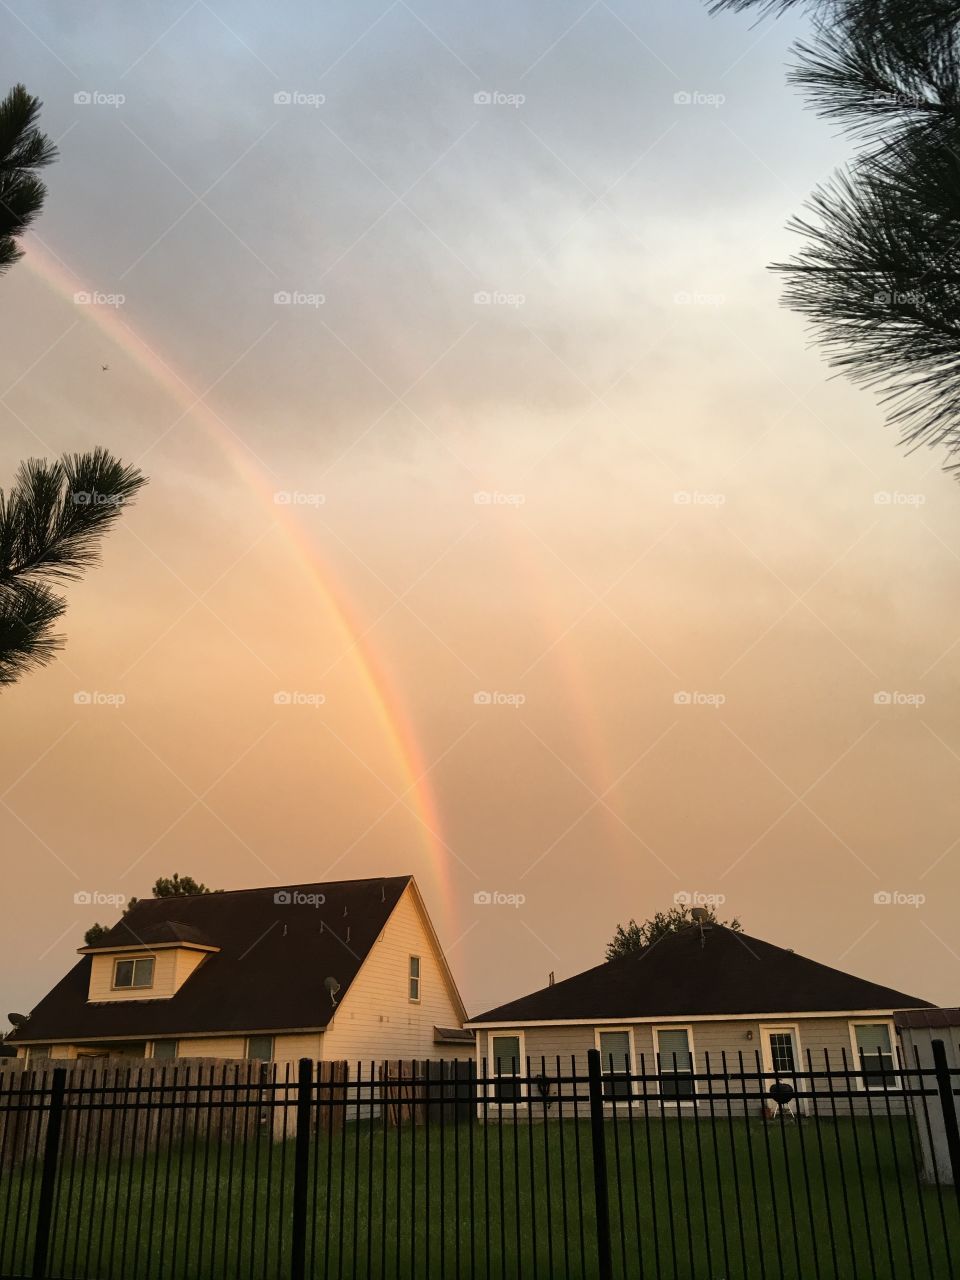 A beautiful rainbow 